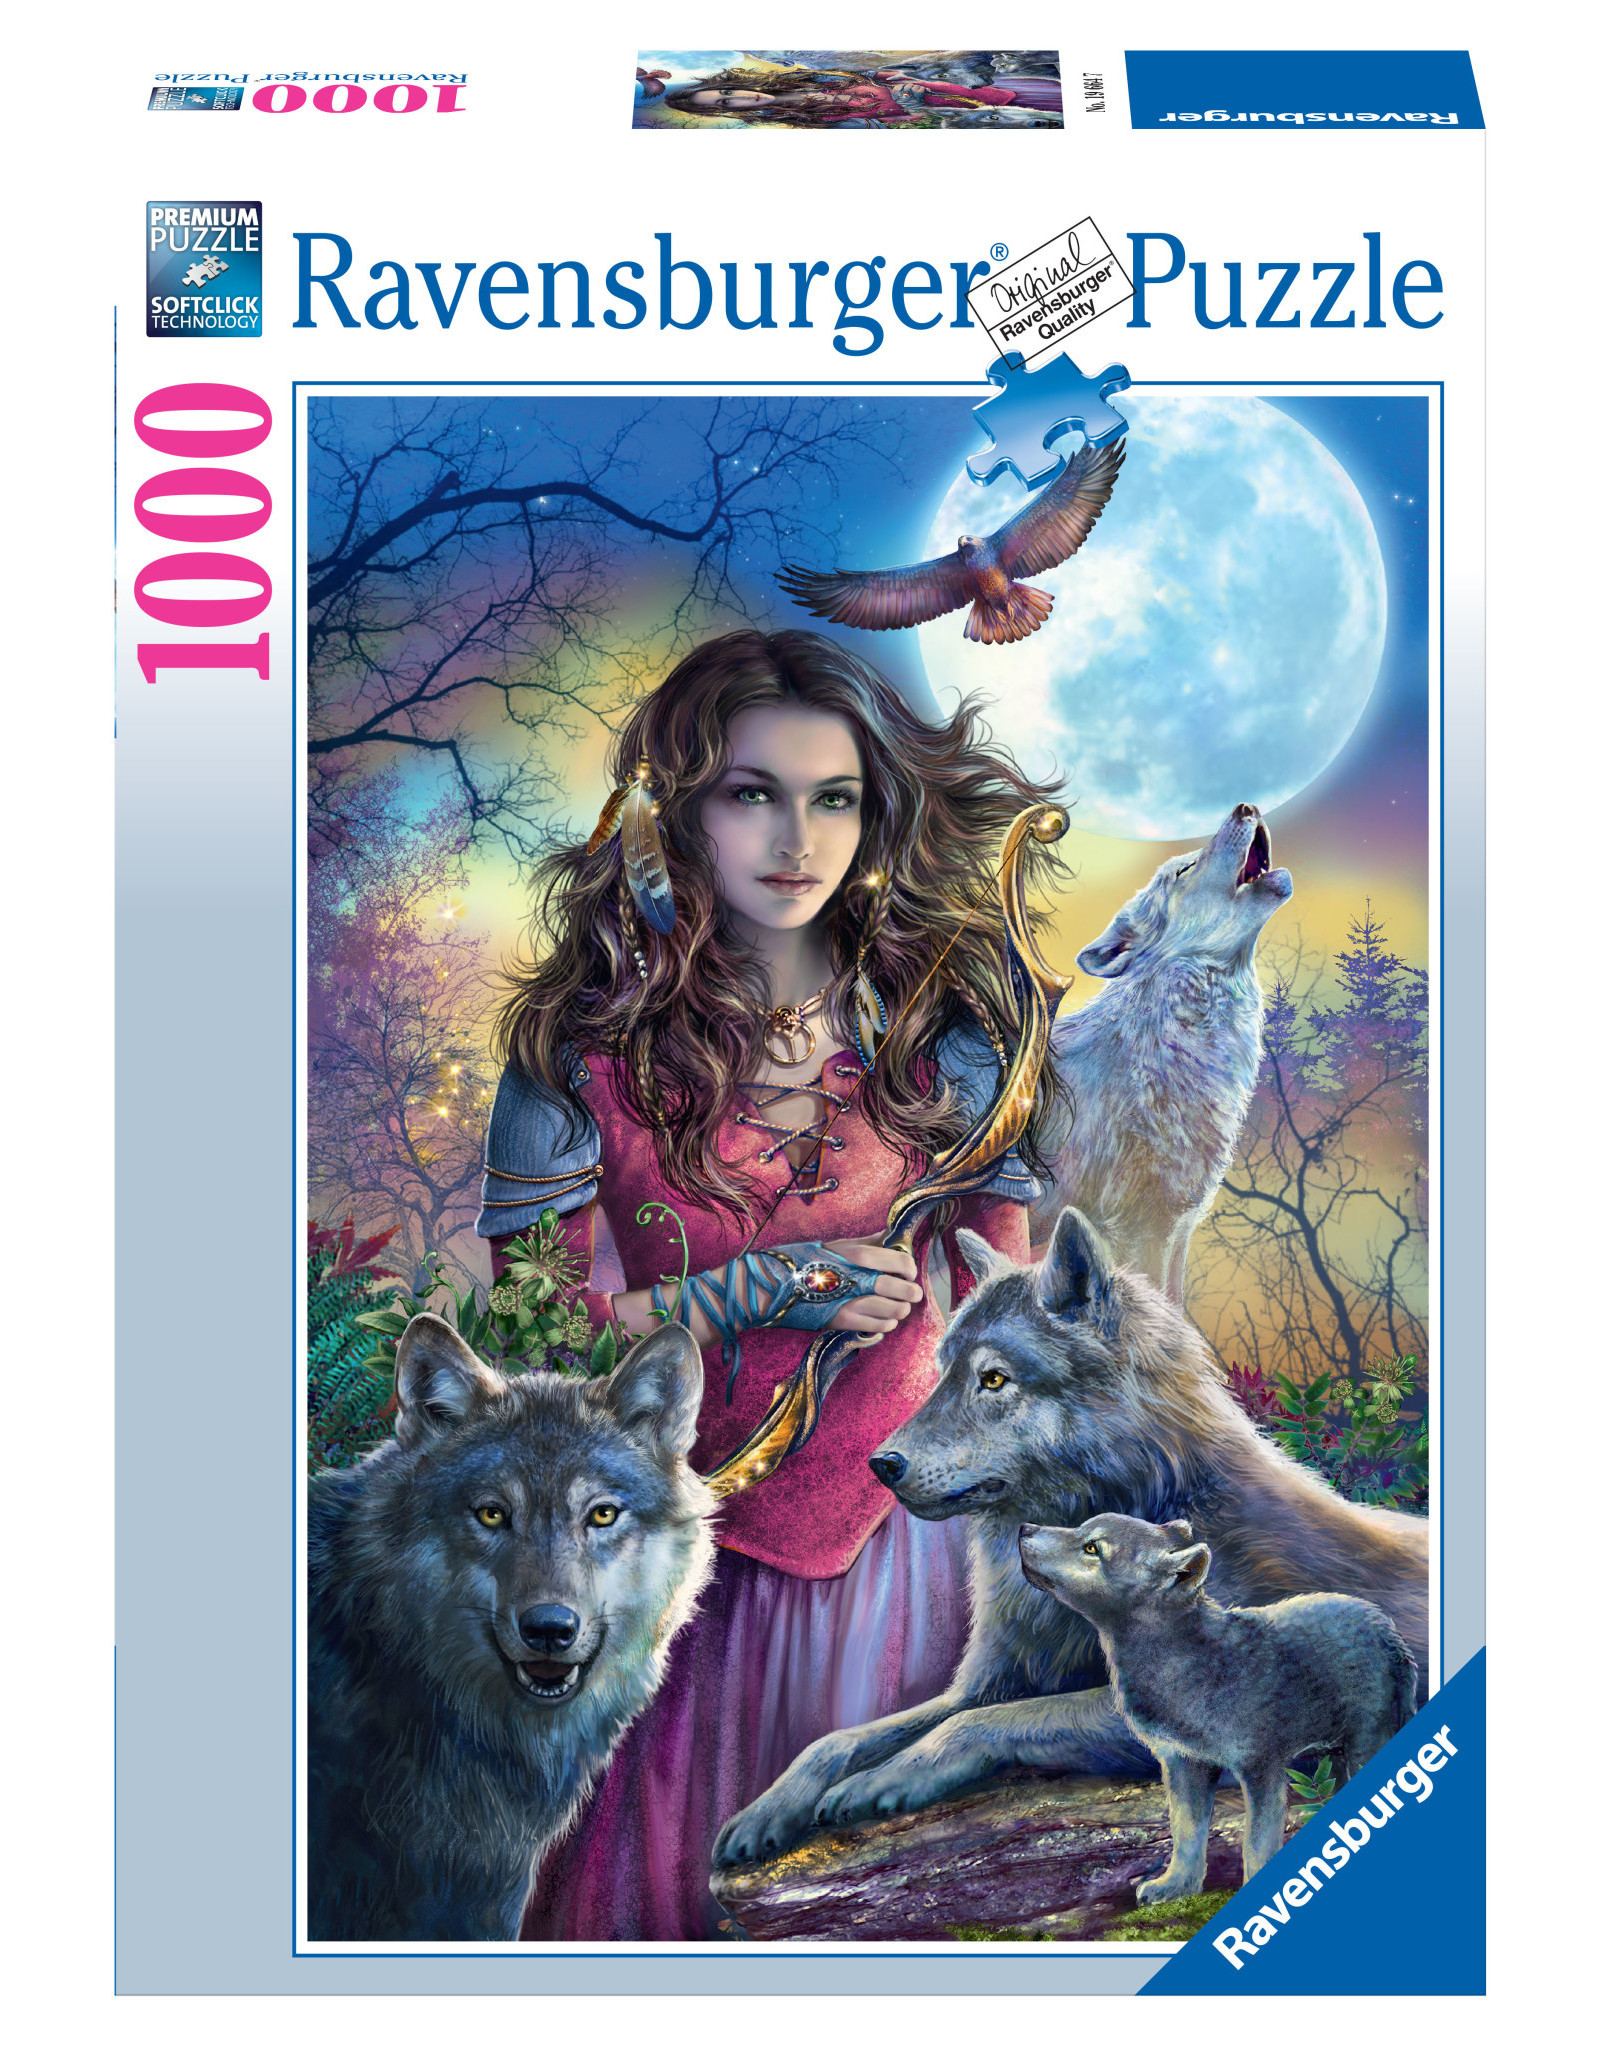 Ravensburger Ravensburger puzzel 196647 Beschermvrouw van de Wolven 1000 stukjes